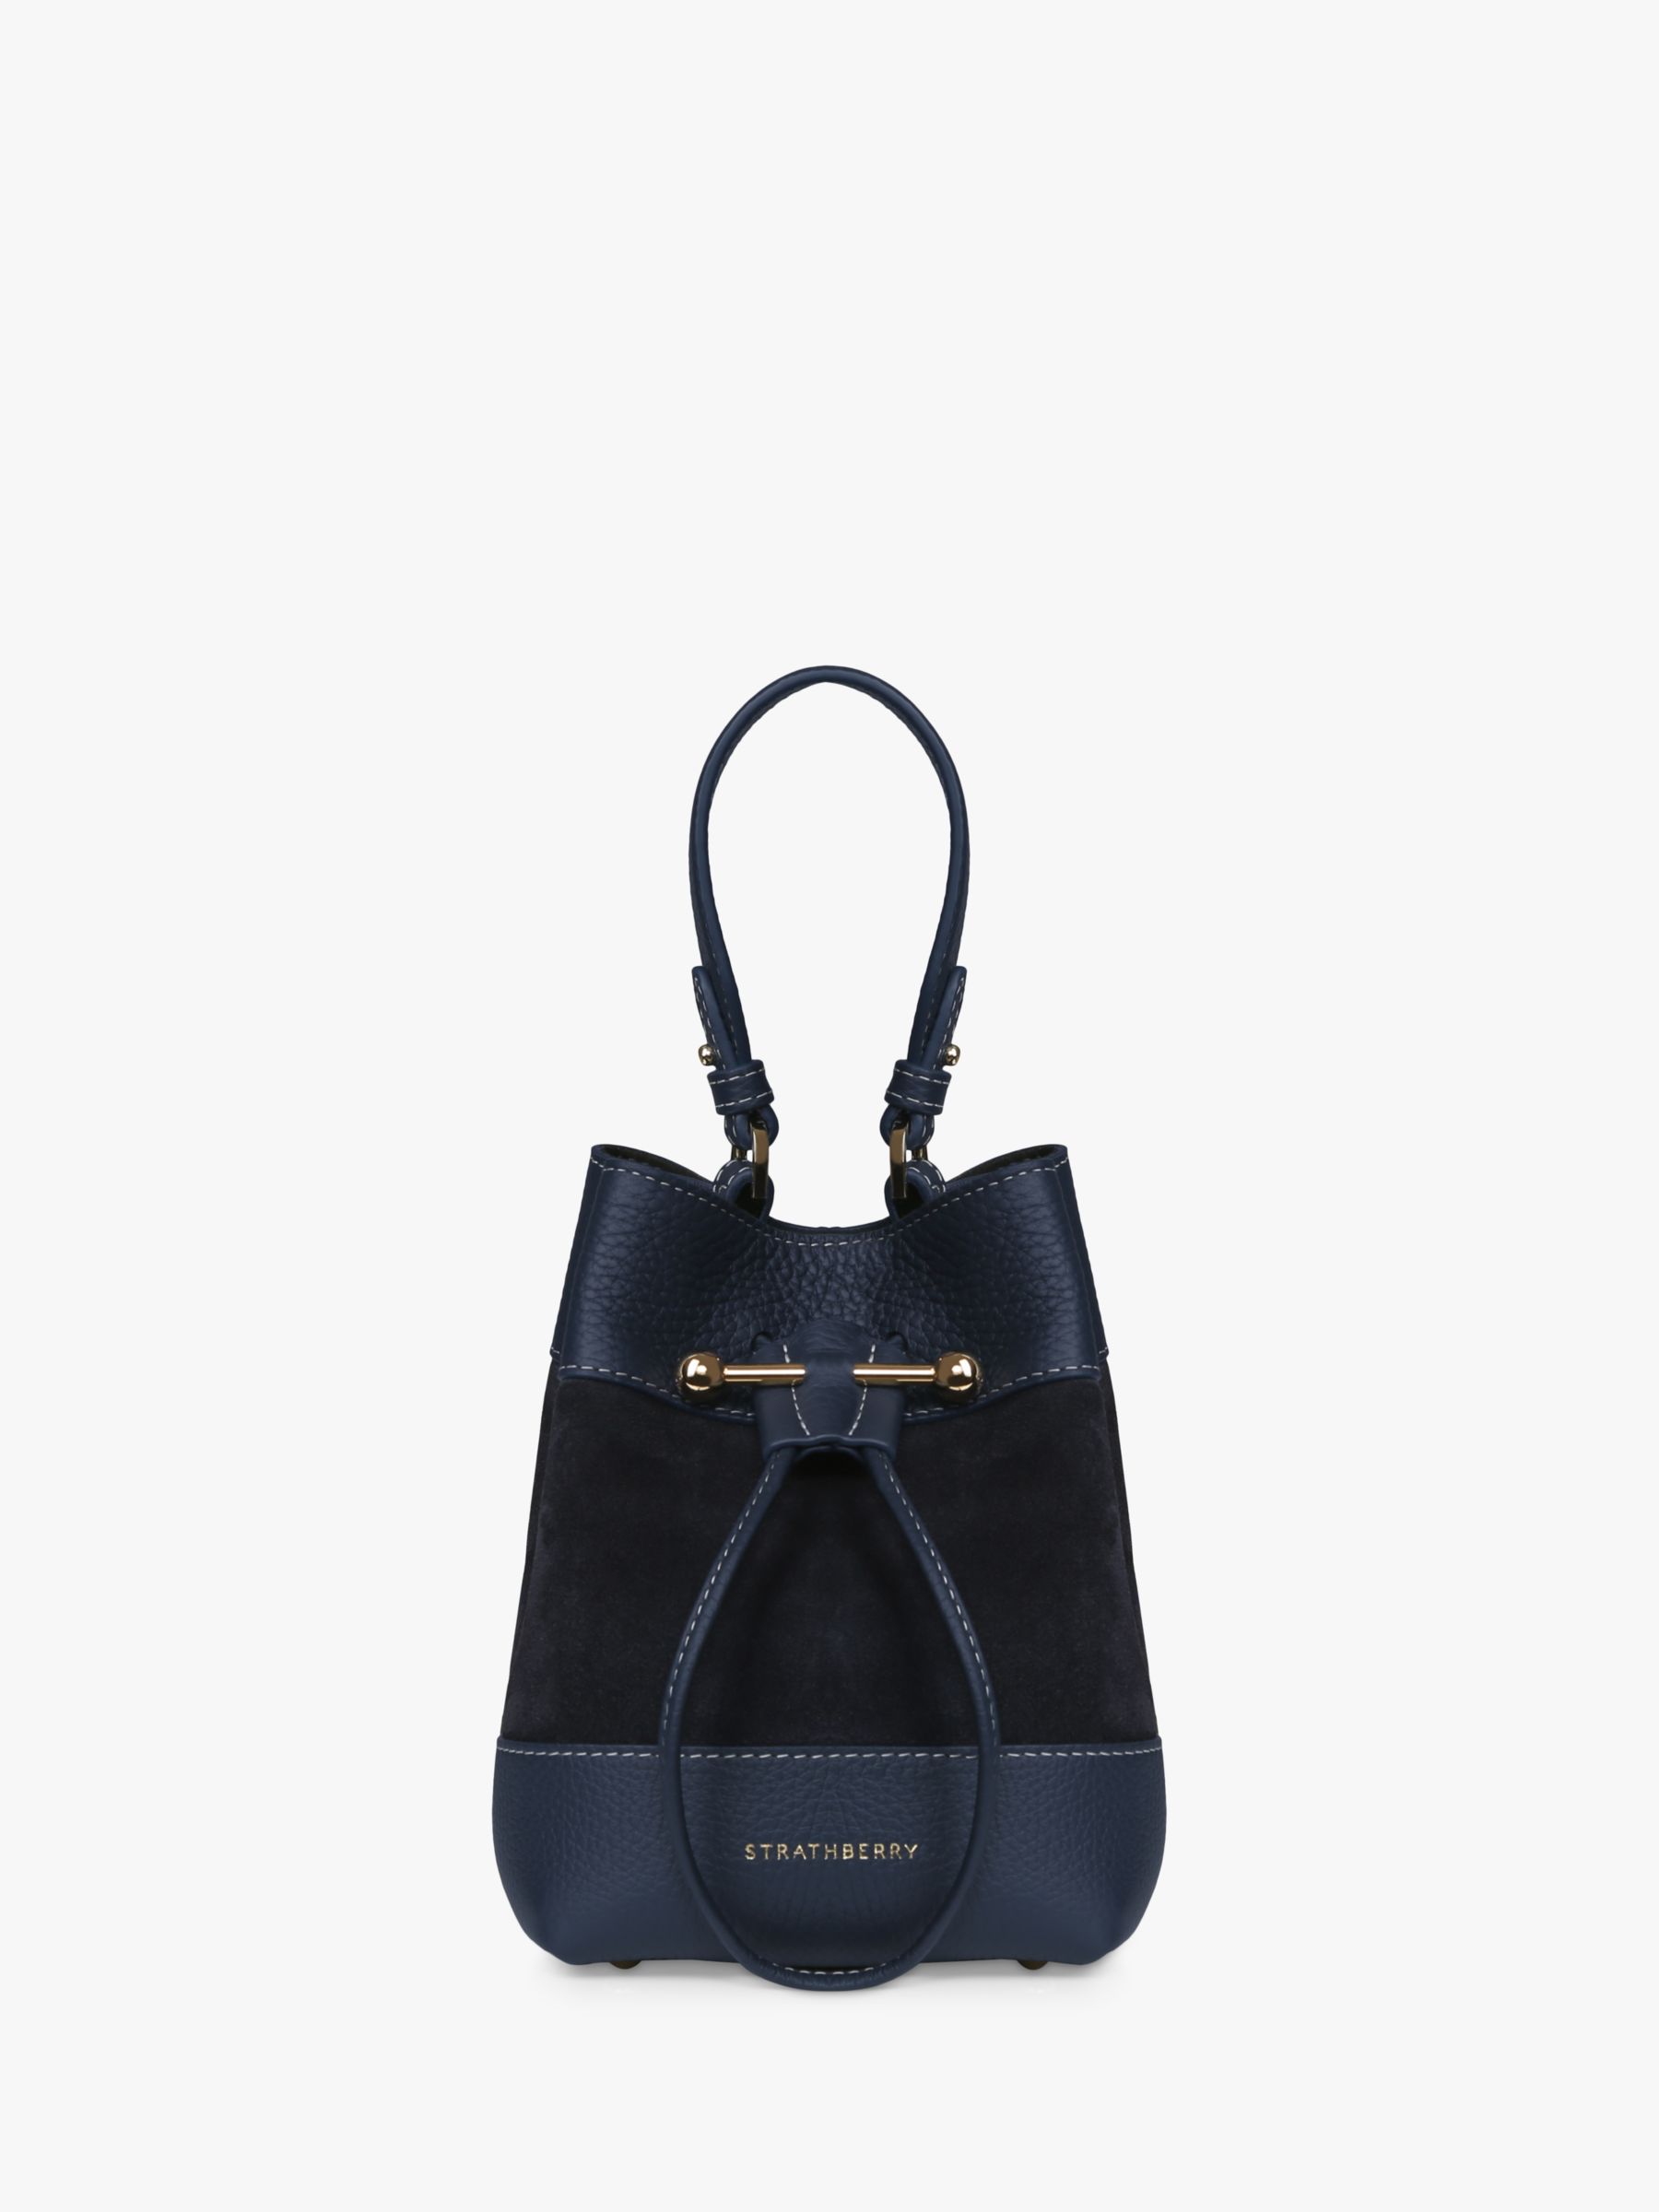 Strathberry Lana Osette Handbag, Navy/Grey Stitch at John Lewis & Partners